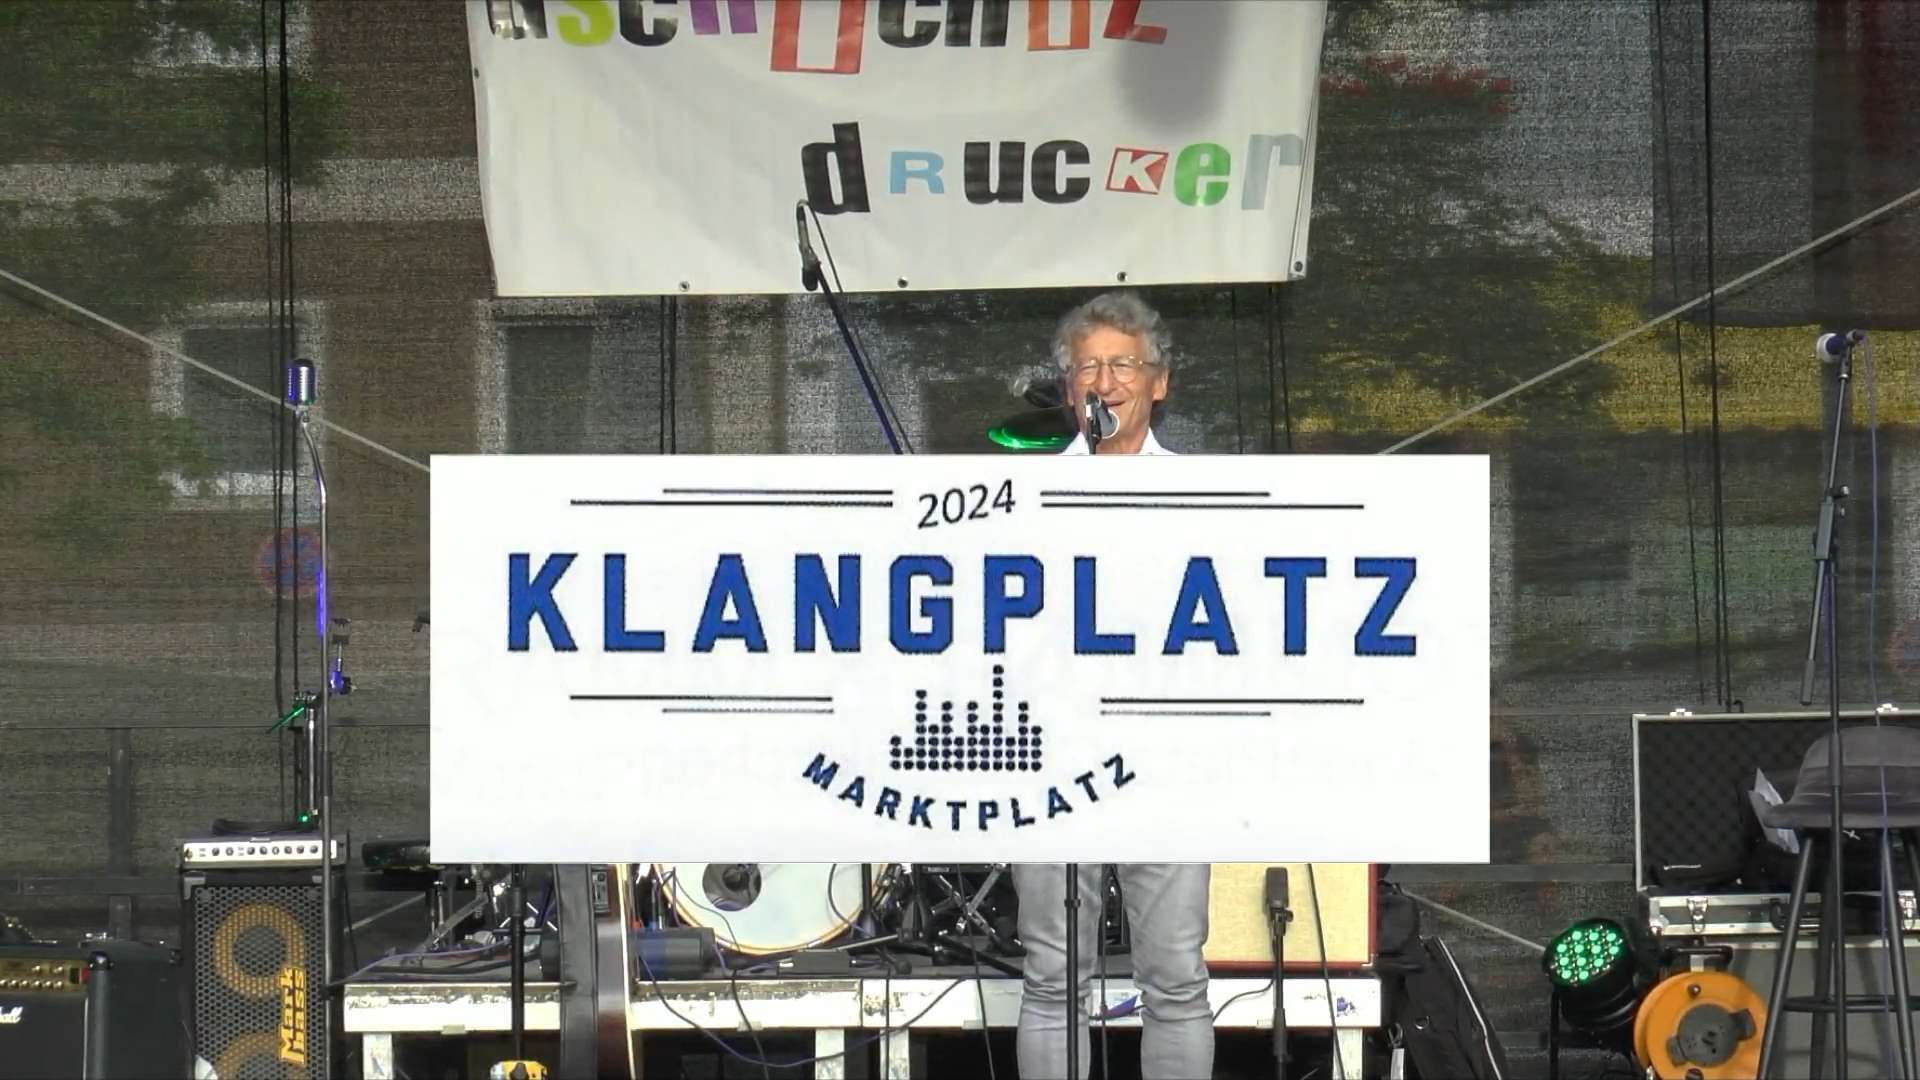 KlangPlatz MarktPlatz